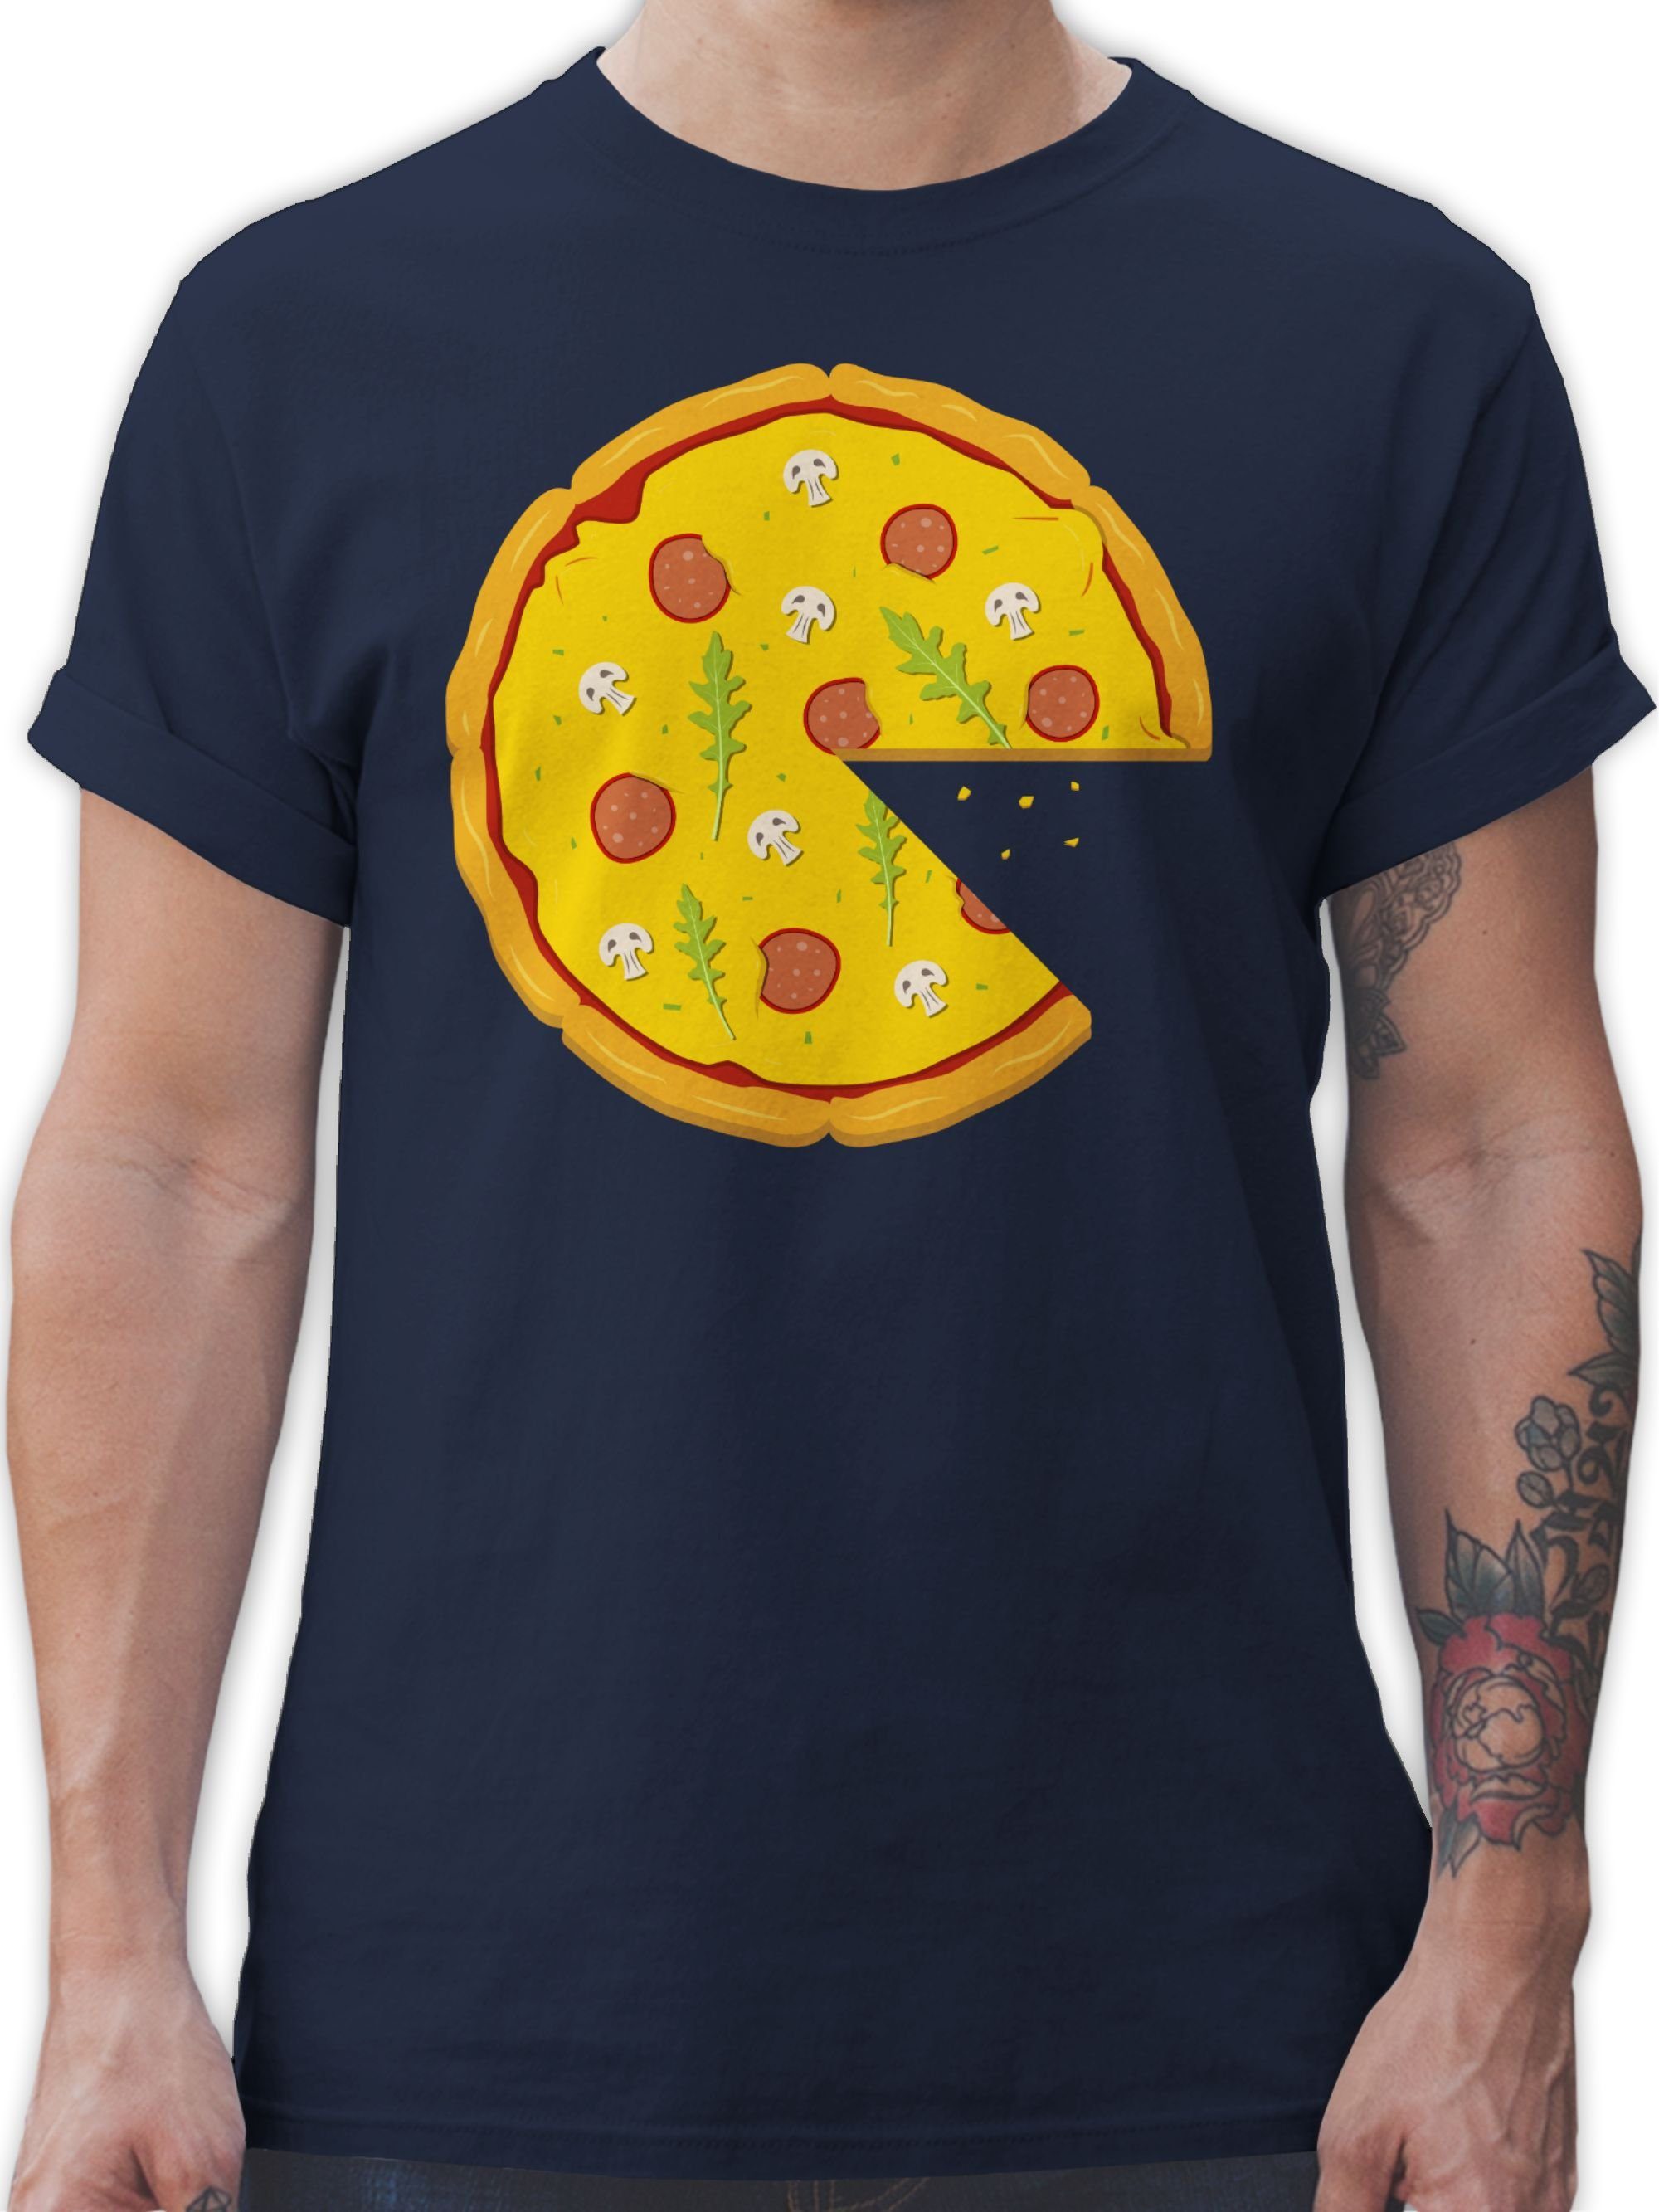 Shirtracer T-Shirt Pizza Partner Teil 1 Partner-Look Pärchen Herren 3 Navy Blau